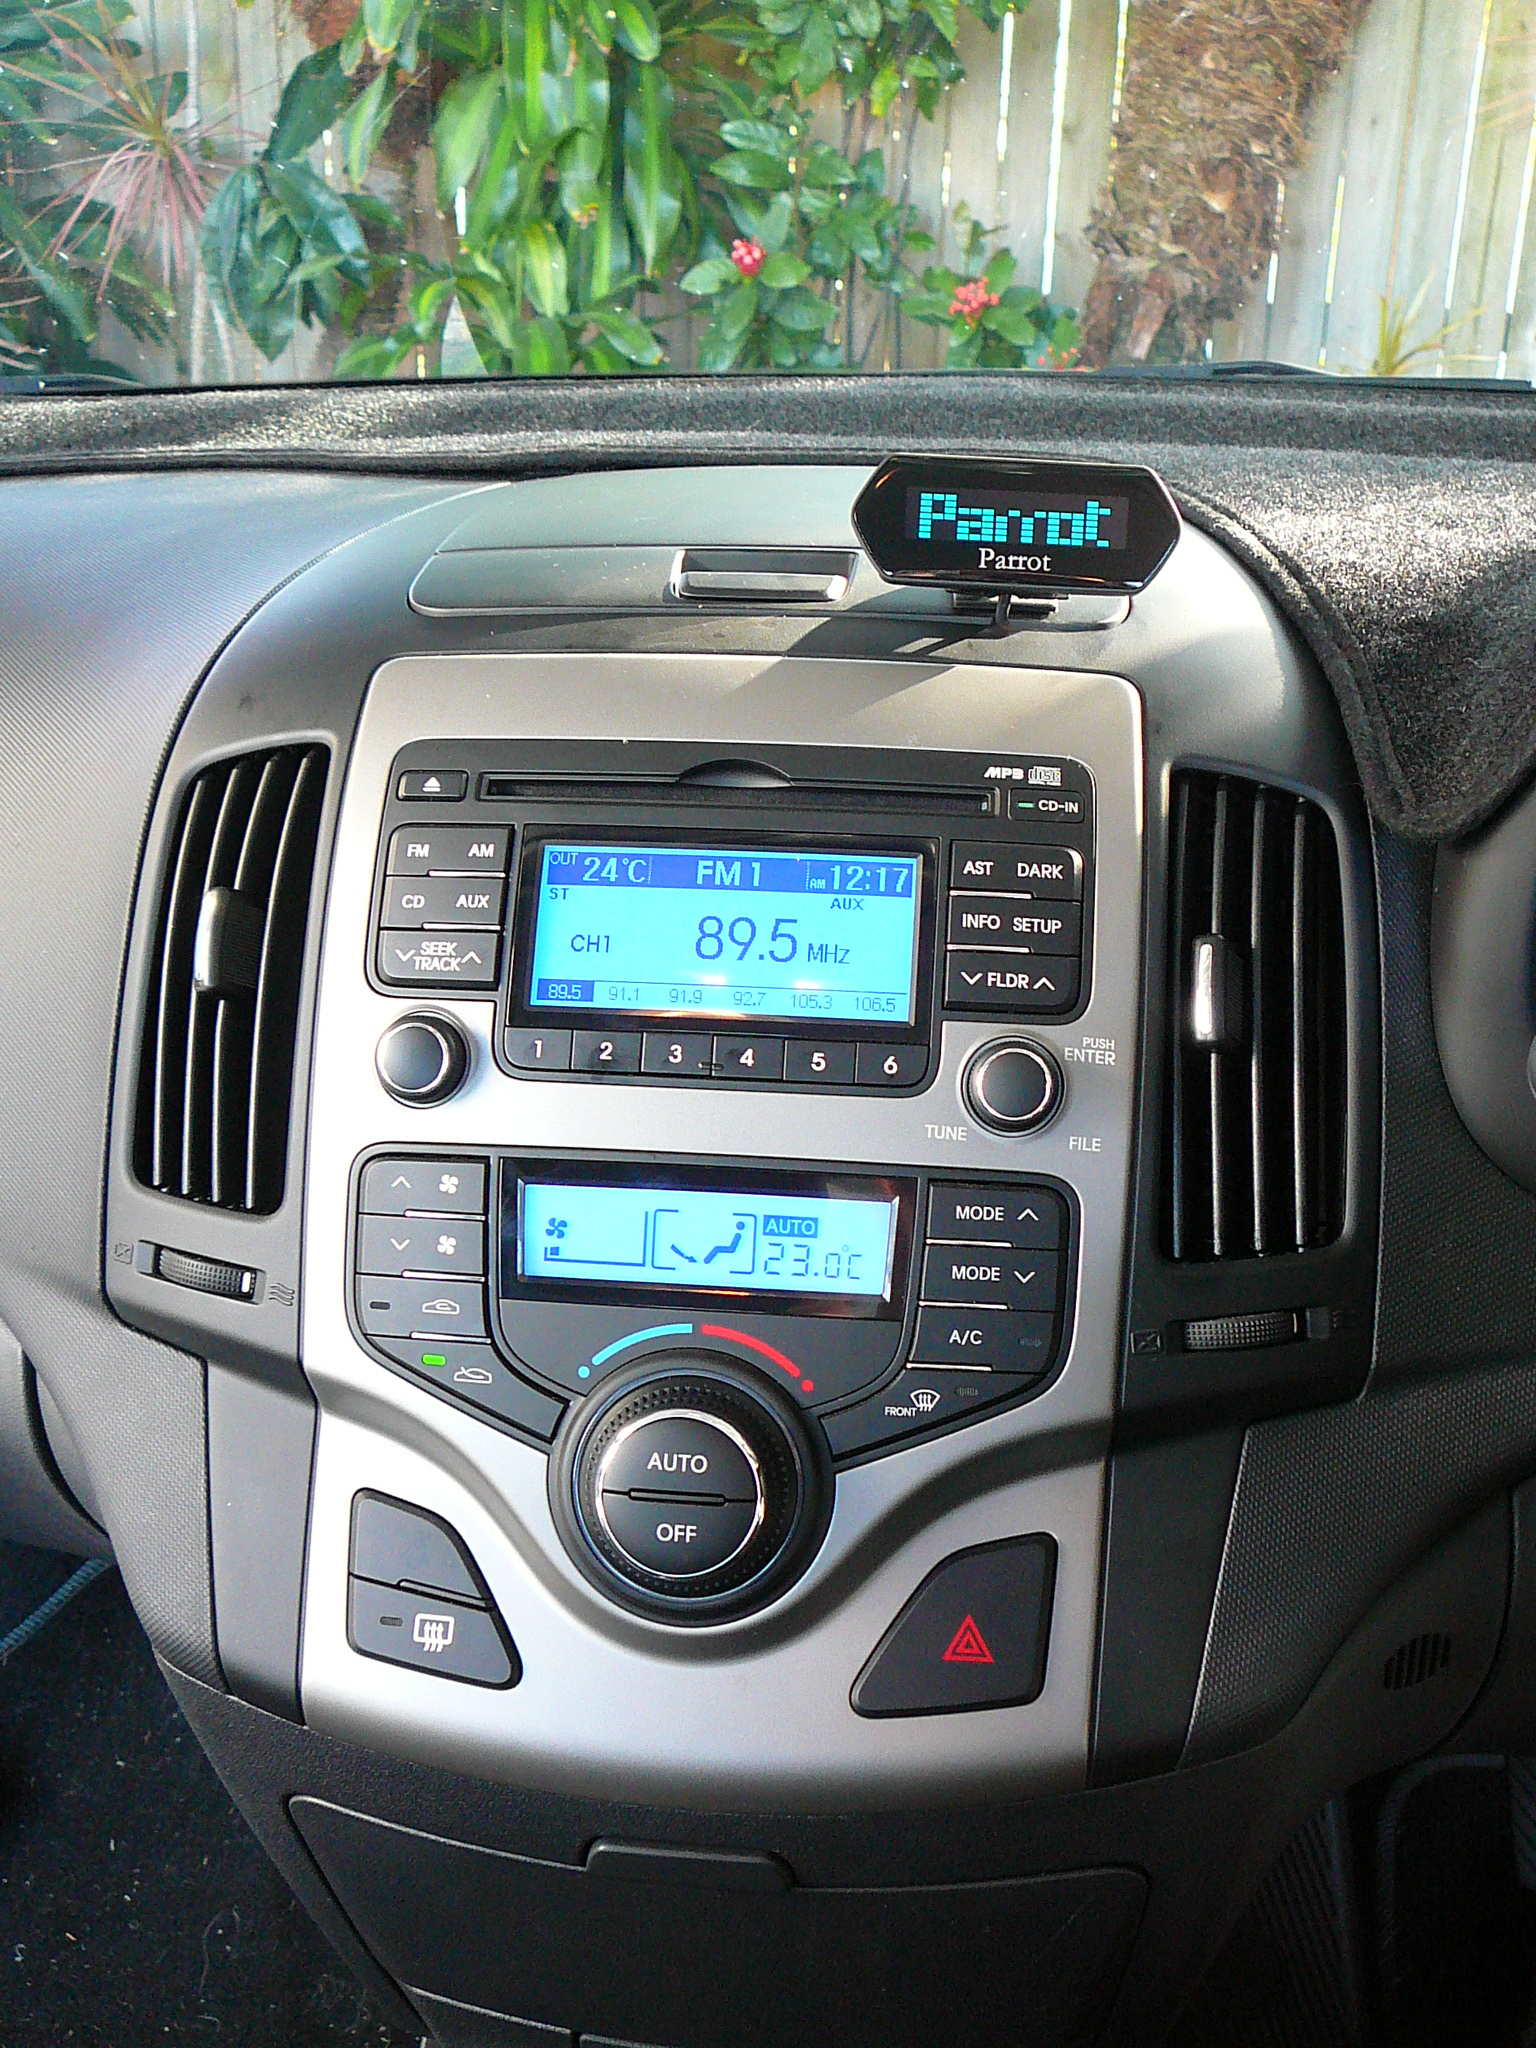 HYUNDAI I30 Parrot Bluetooth Handsfree